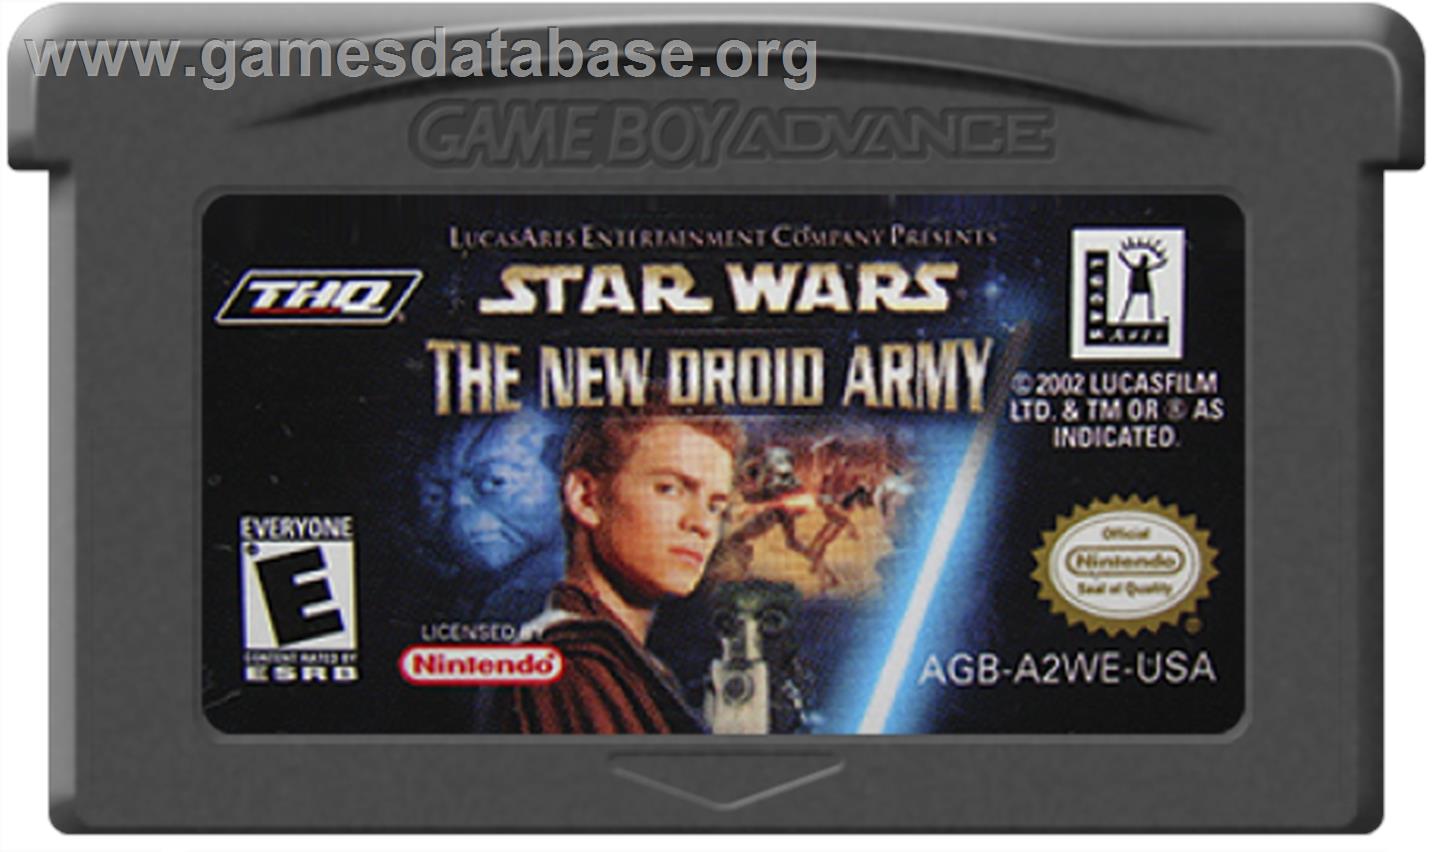 Star Wars: The New Droid Army - Nintendo Game Boy Advance - Artwork - Cartridge